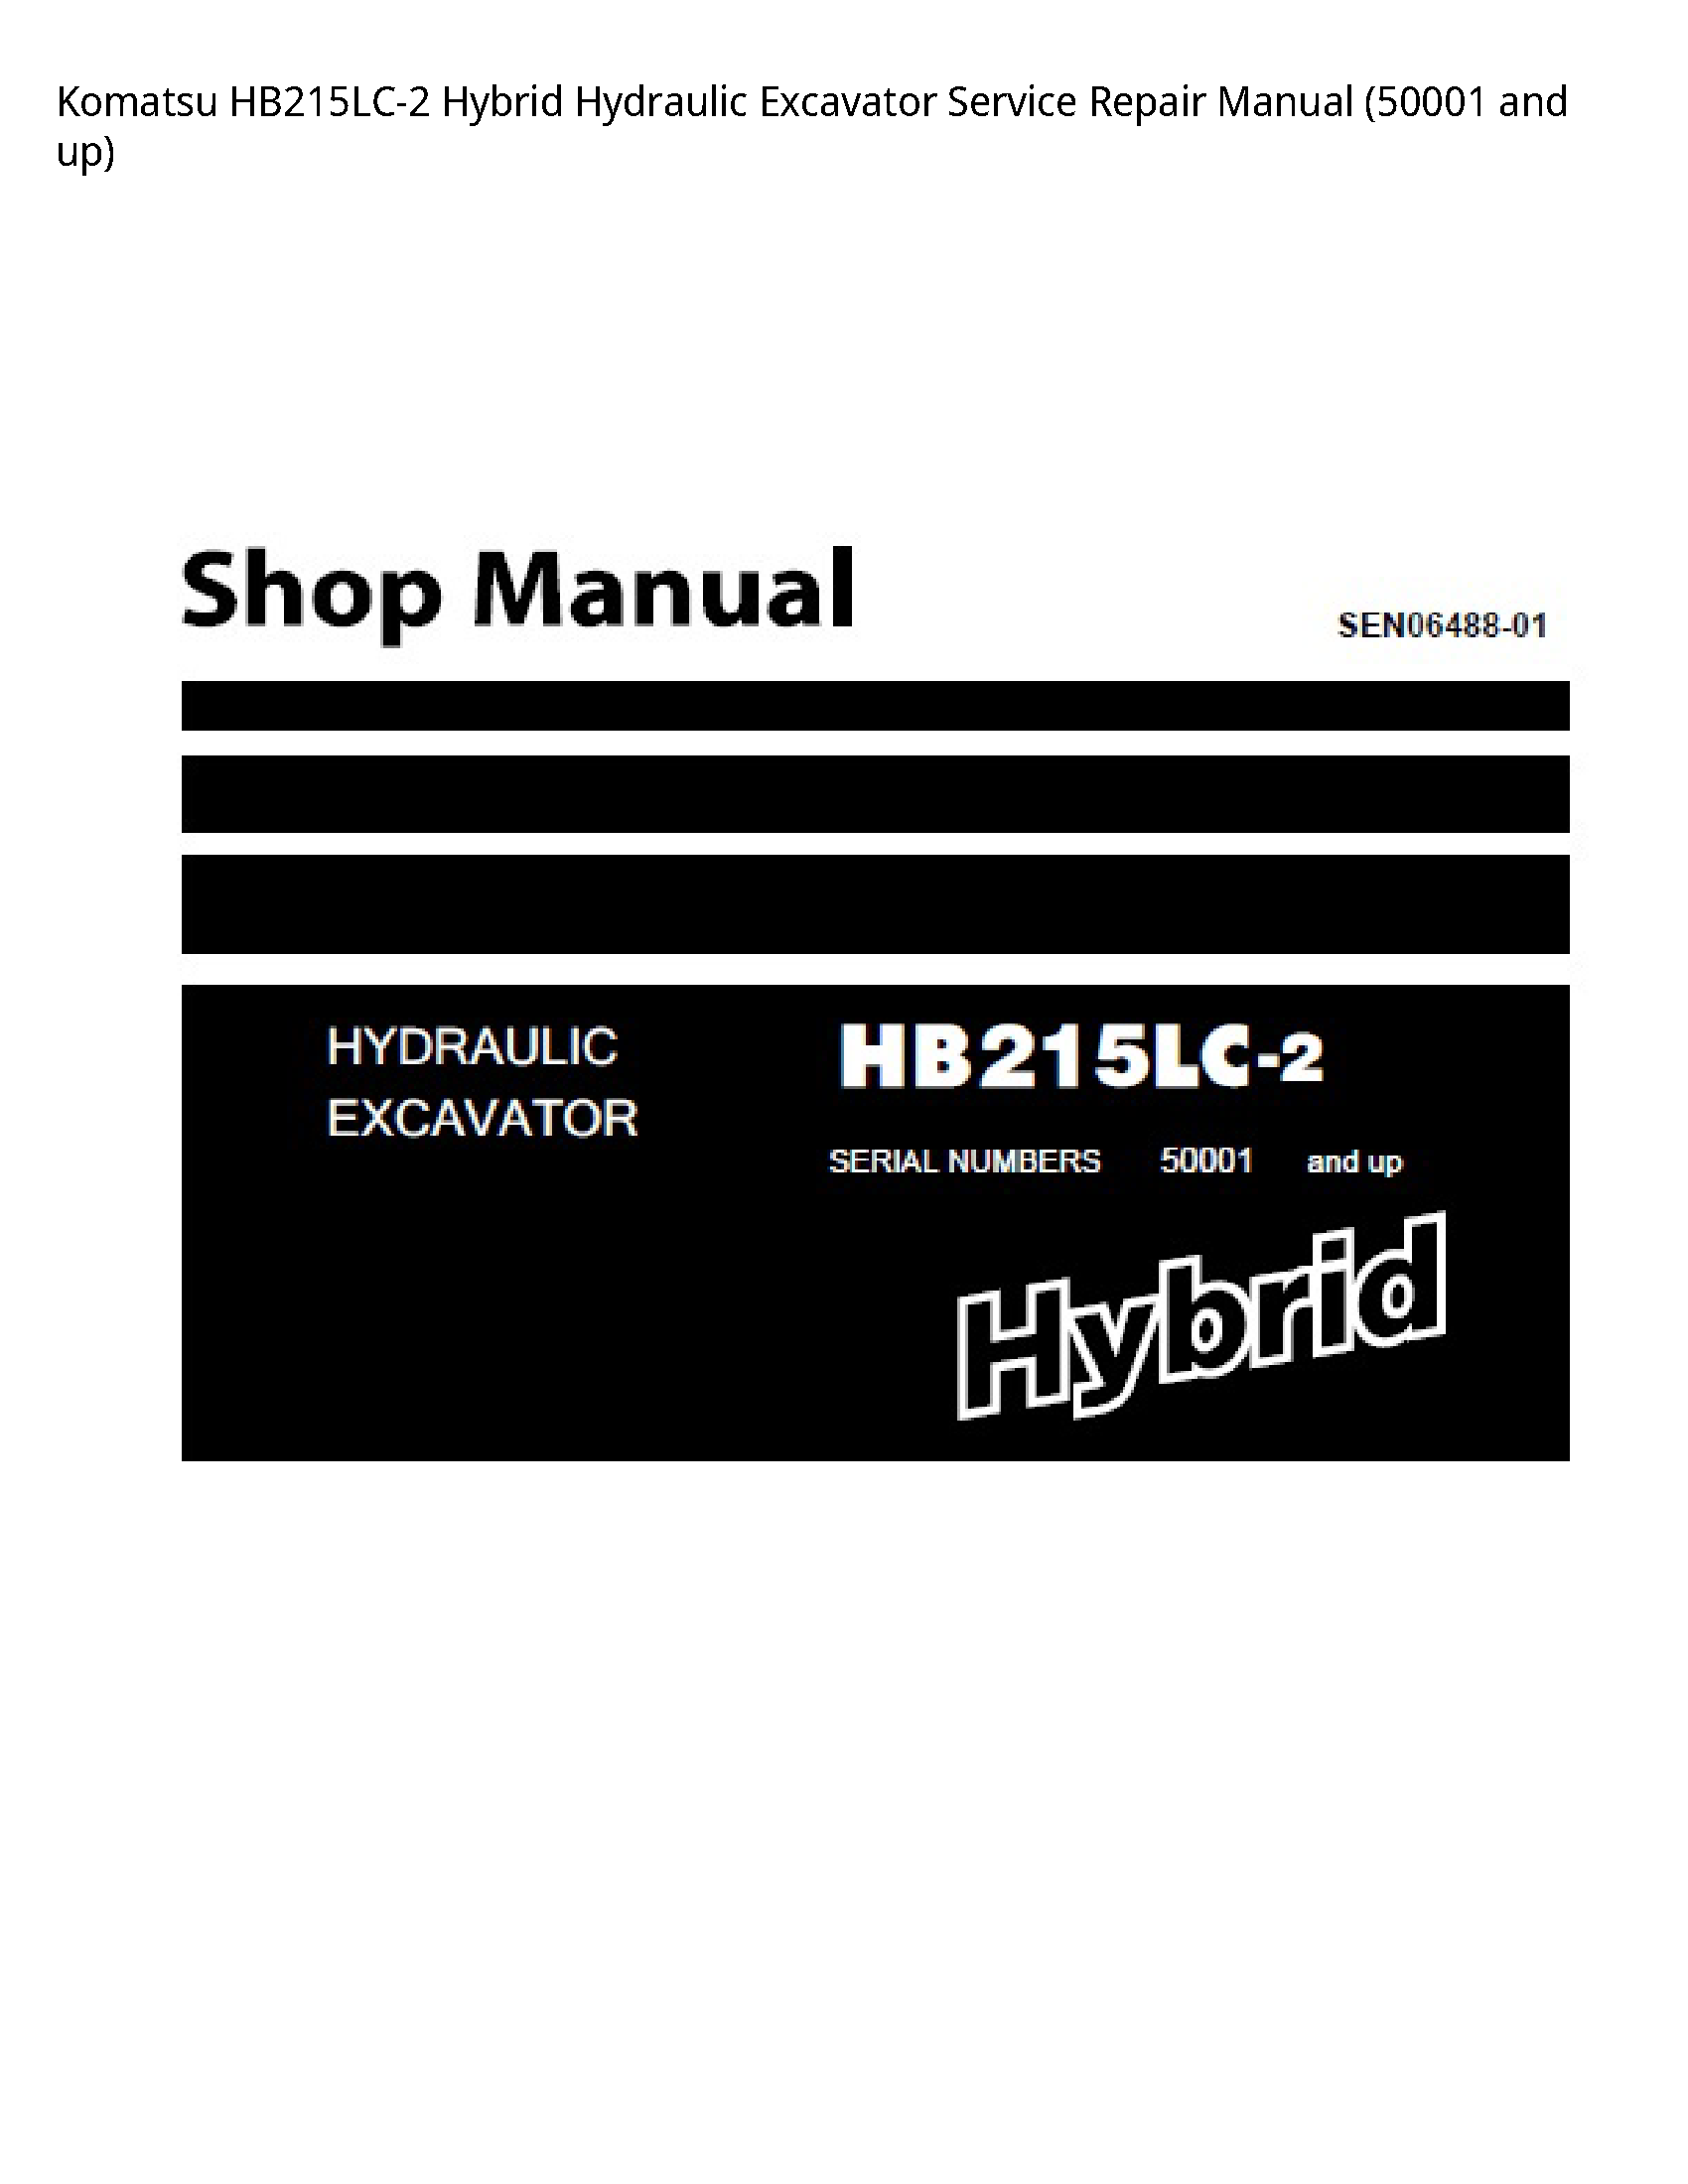 KOMATSU HB215LC-2 Hybrid Hydraulic Excavator manual